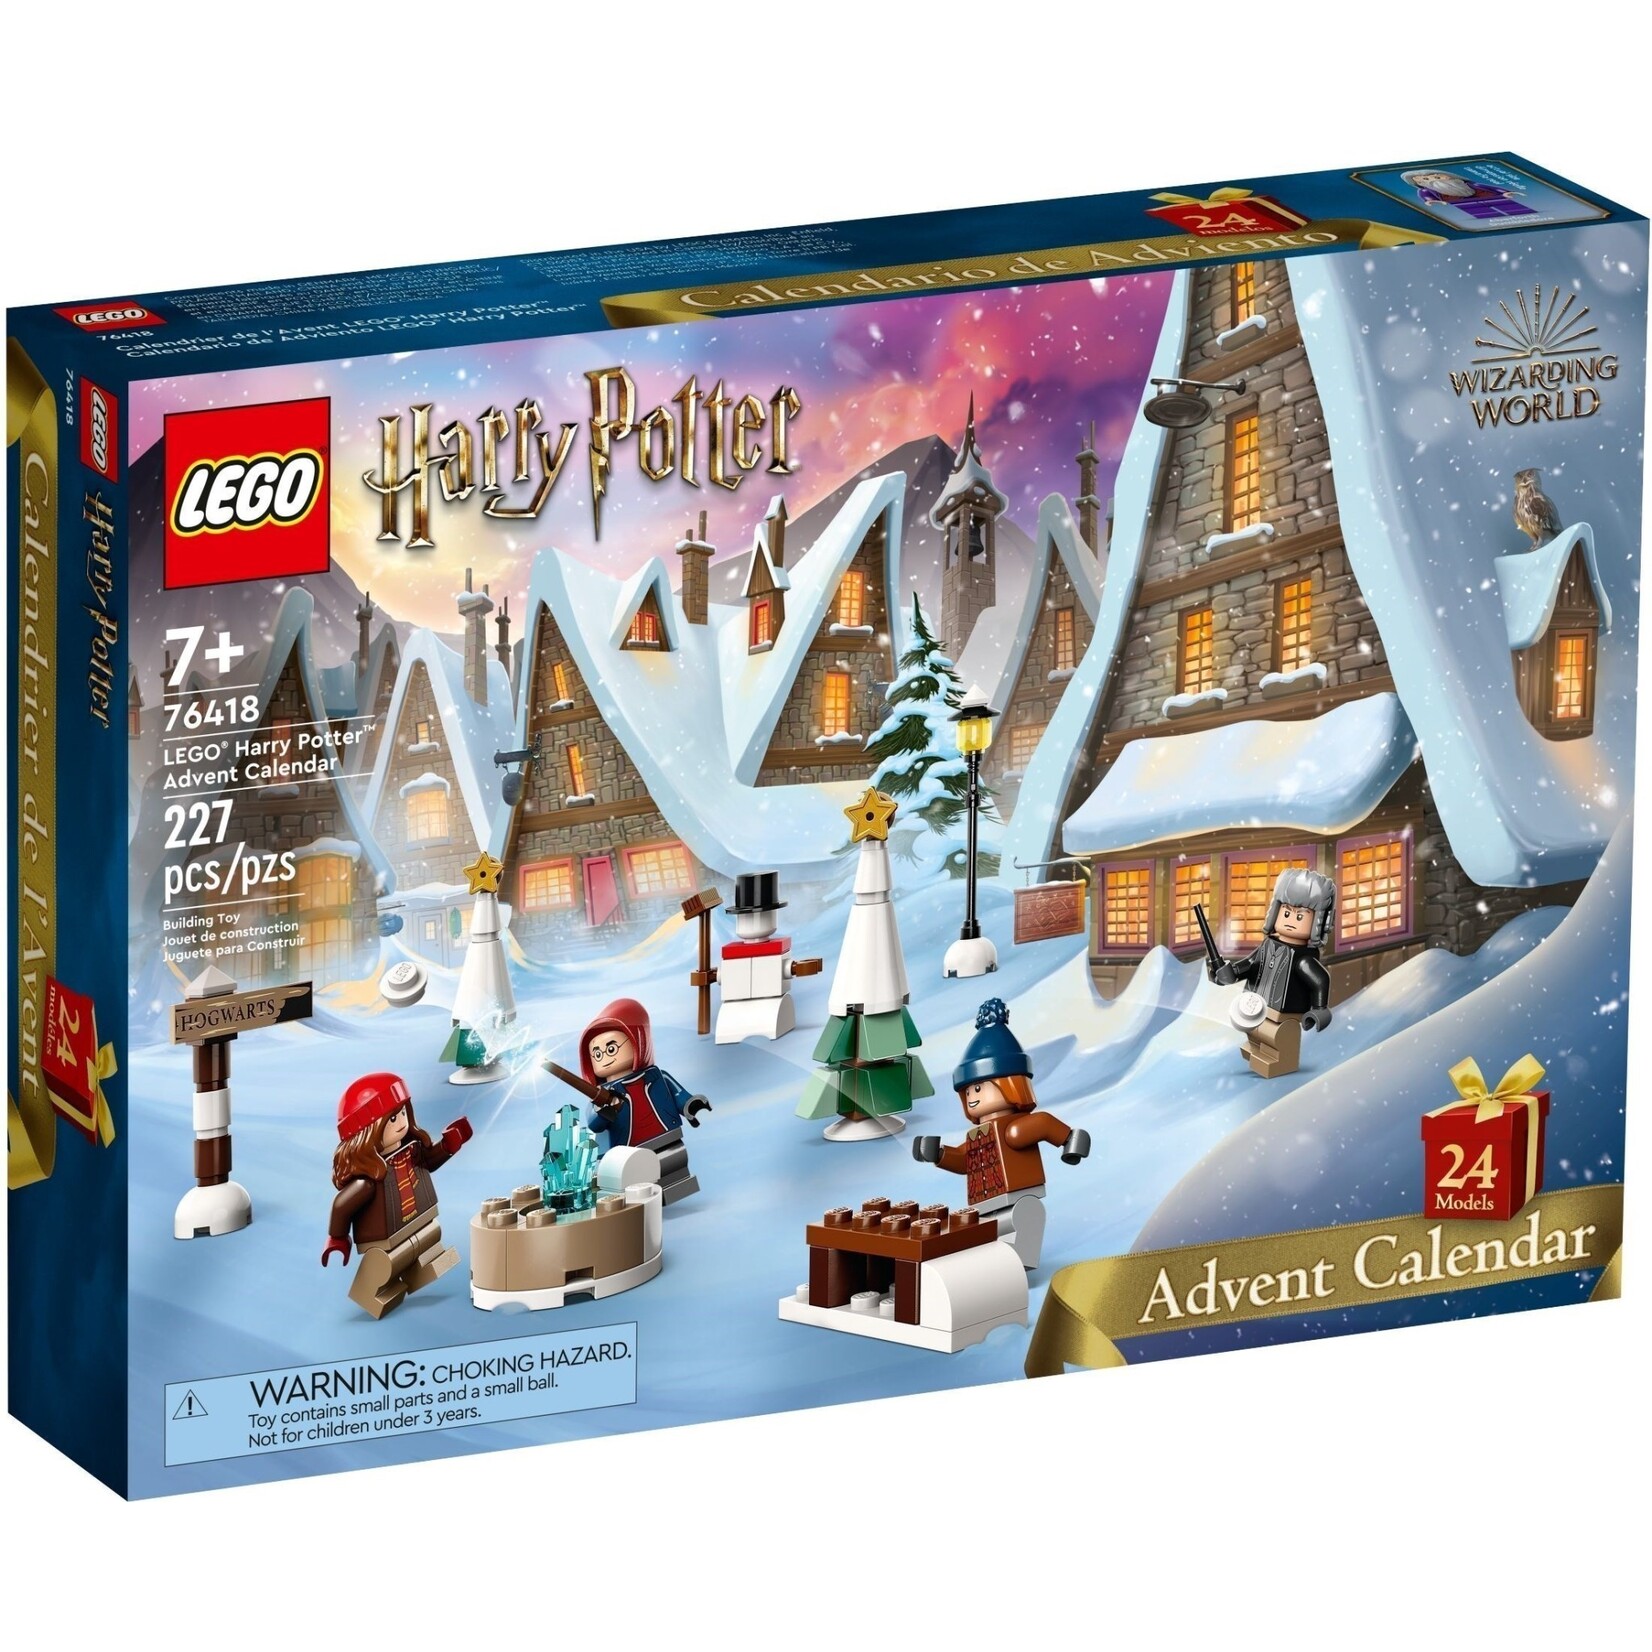 LEGO Harry Potter Adventkalender - 76418